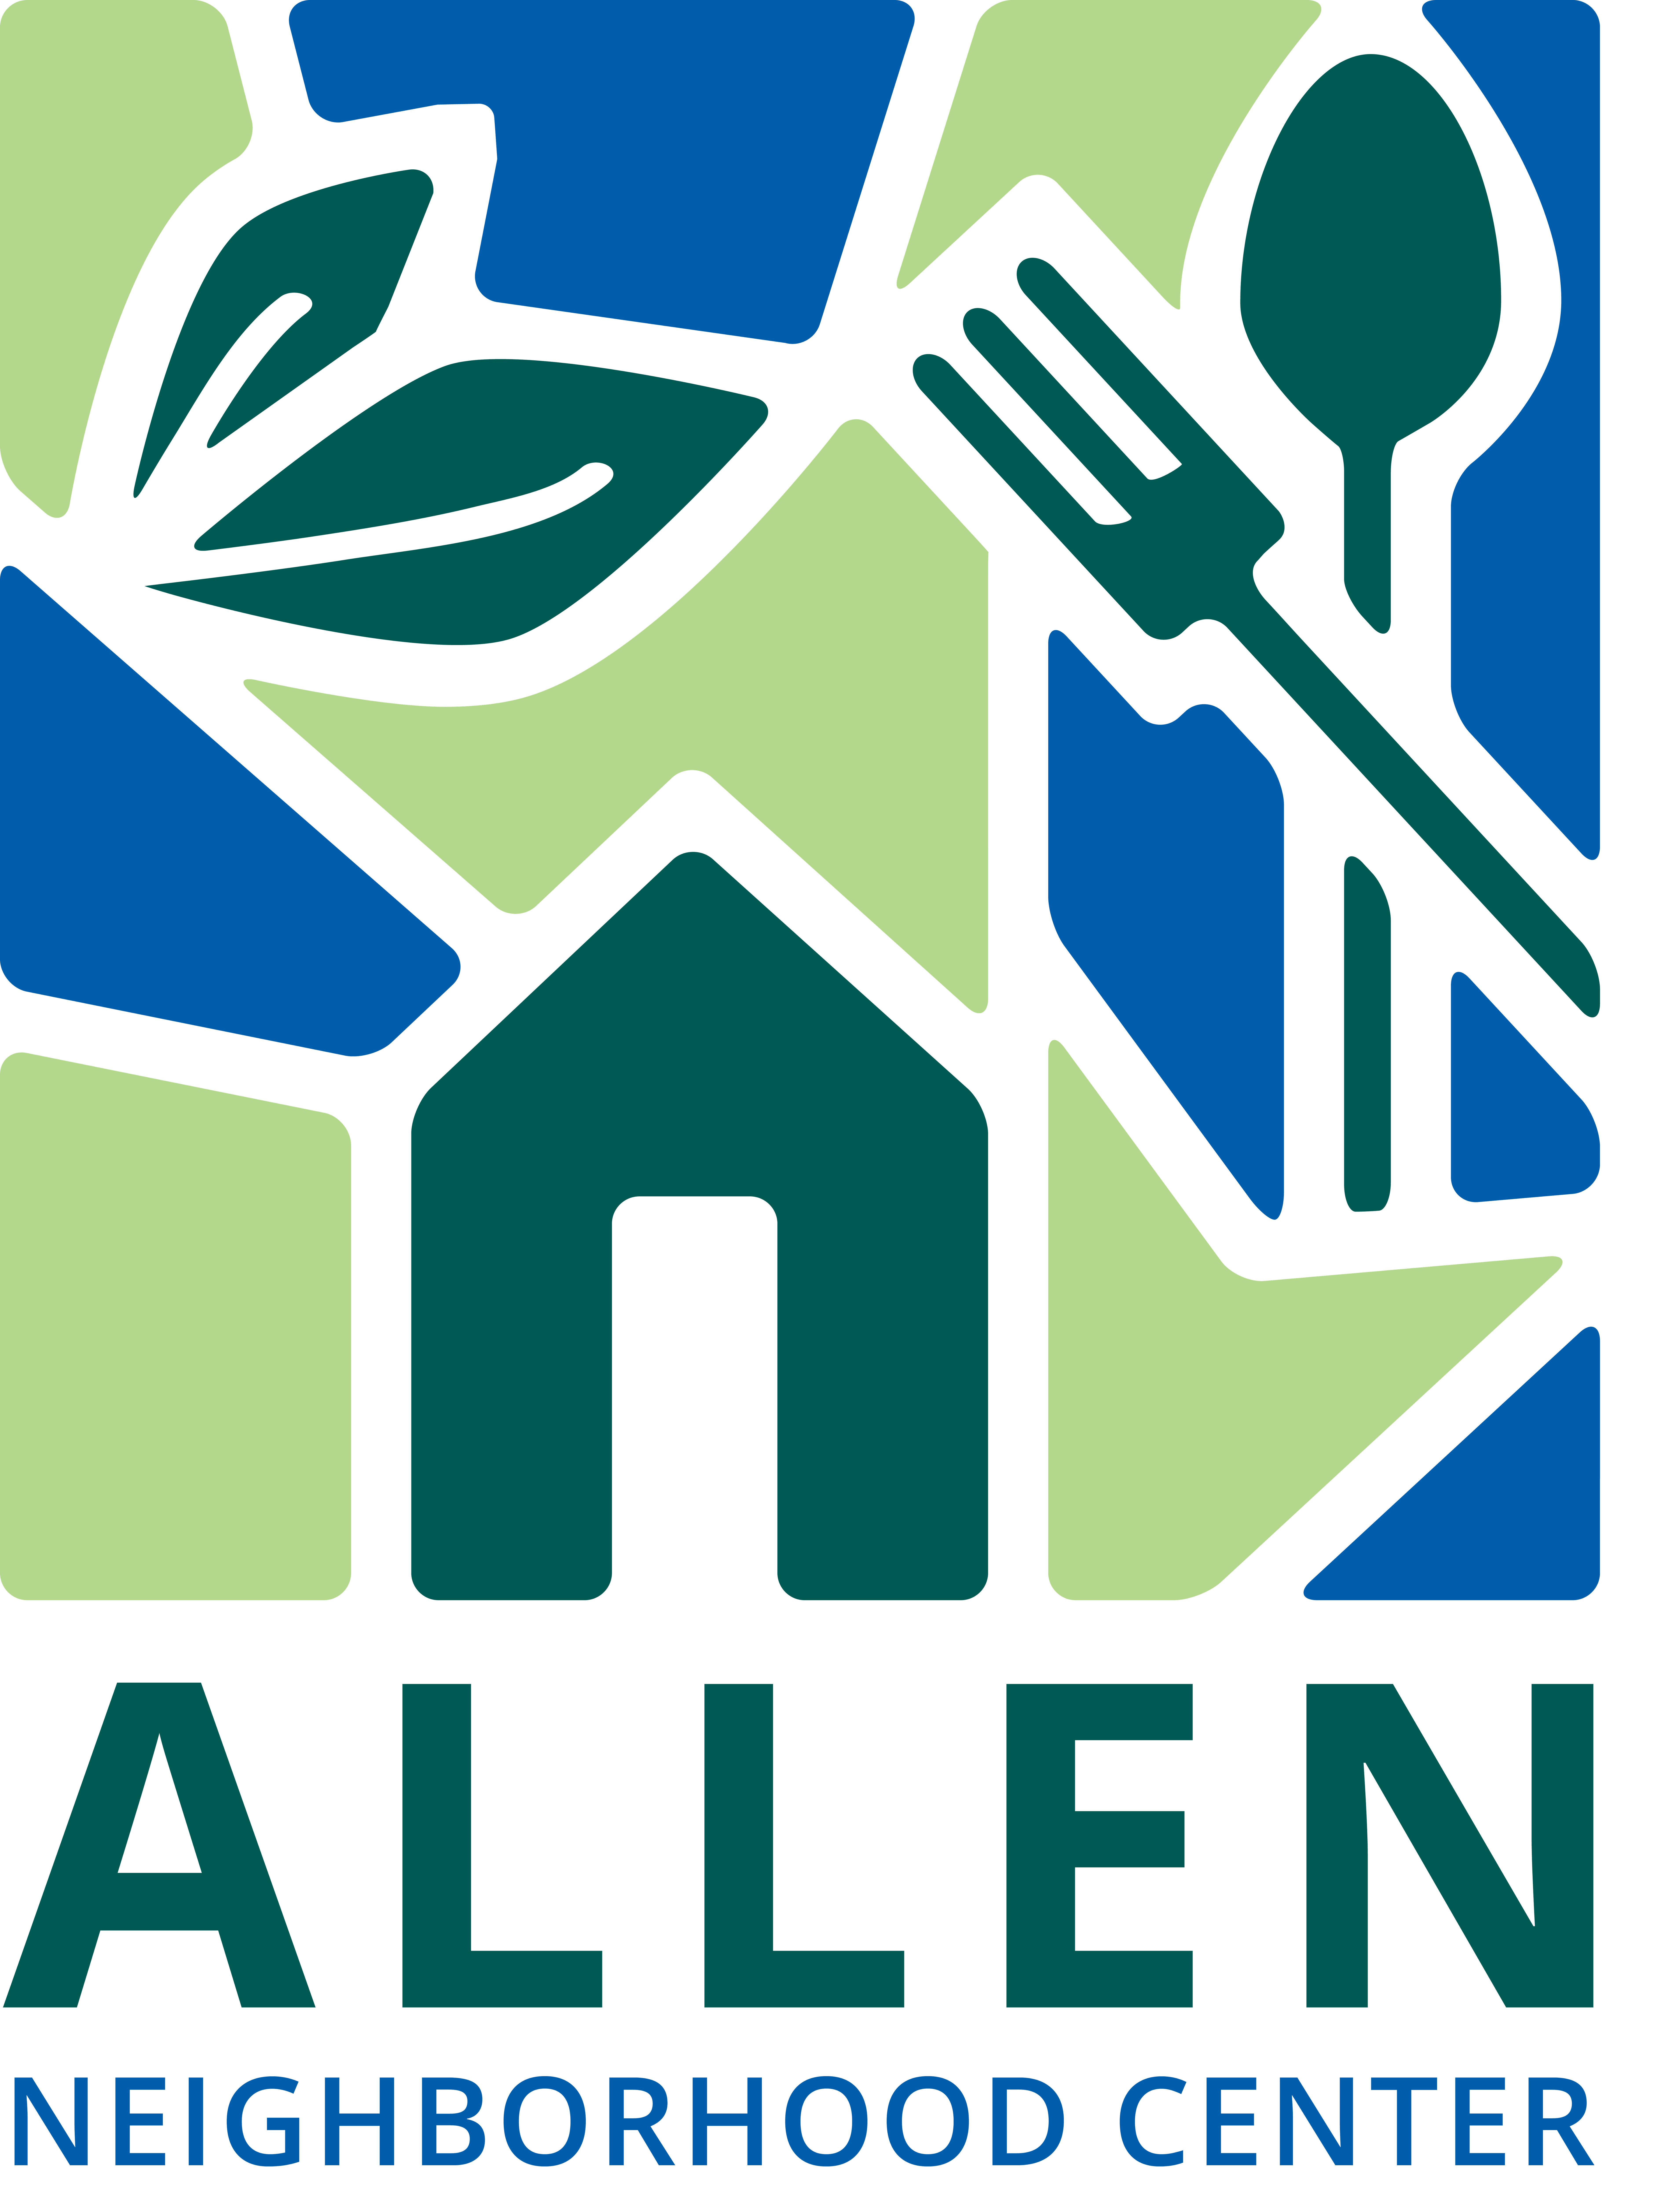 Allen Neighborhood Center